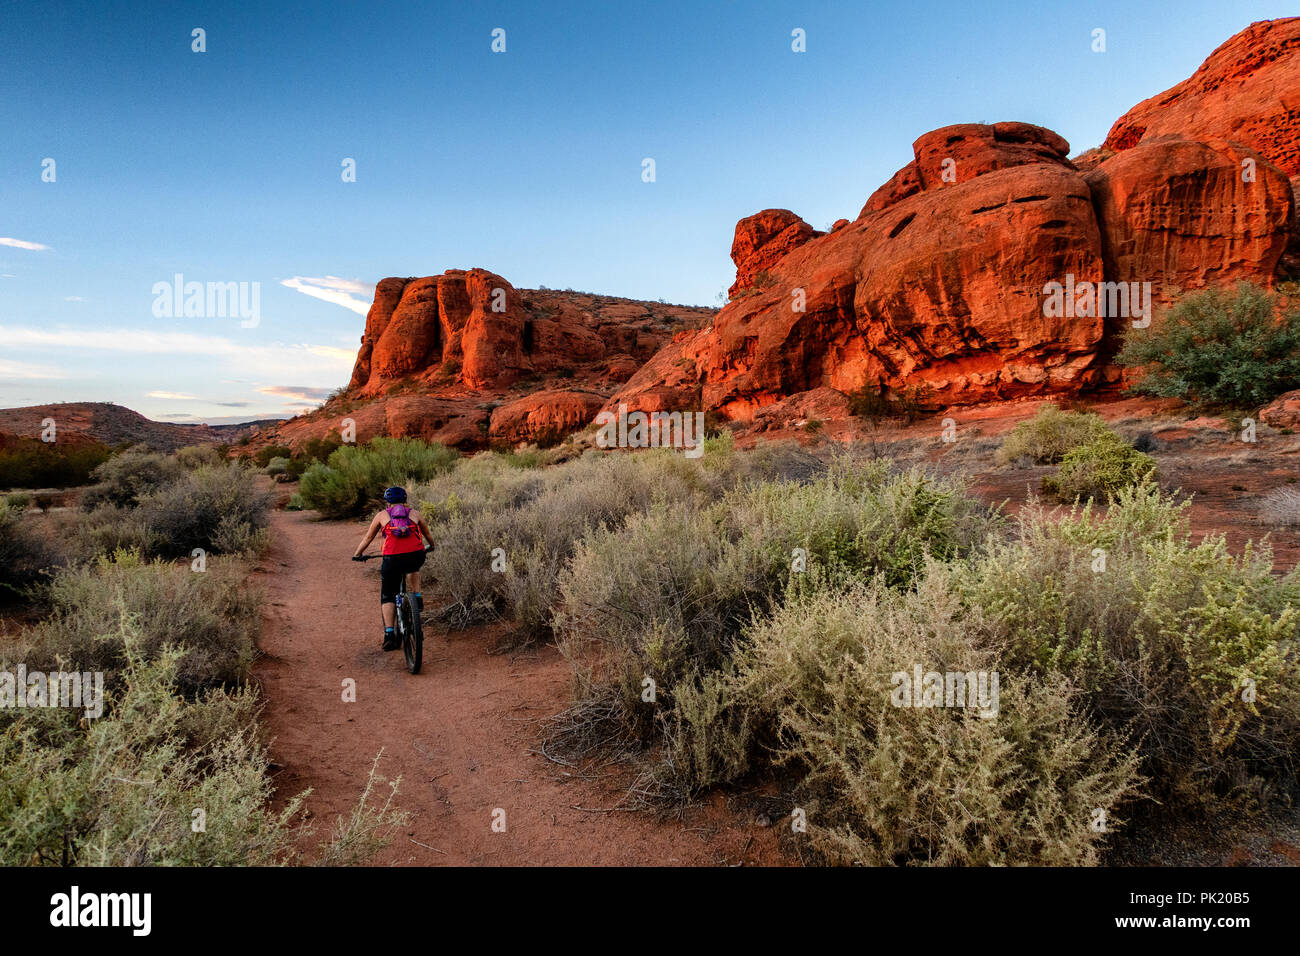 A woman rides a mountain bike the Chuckwalla trail in the Red Cliffs Desert Reserve near Saint George, Utah, USA. Stock Photo